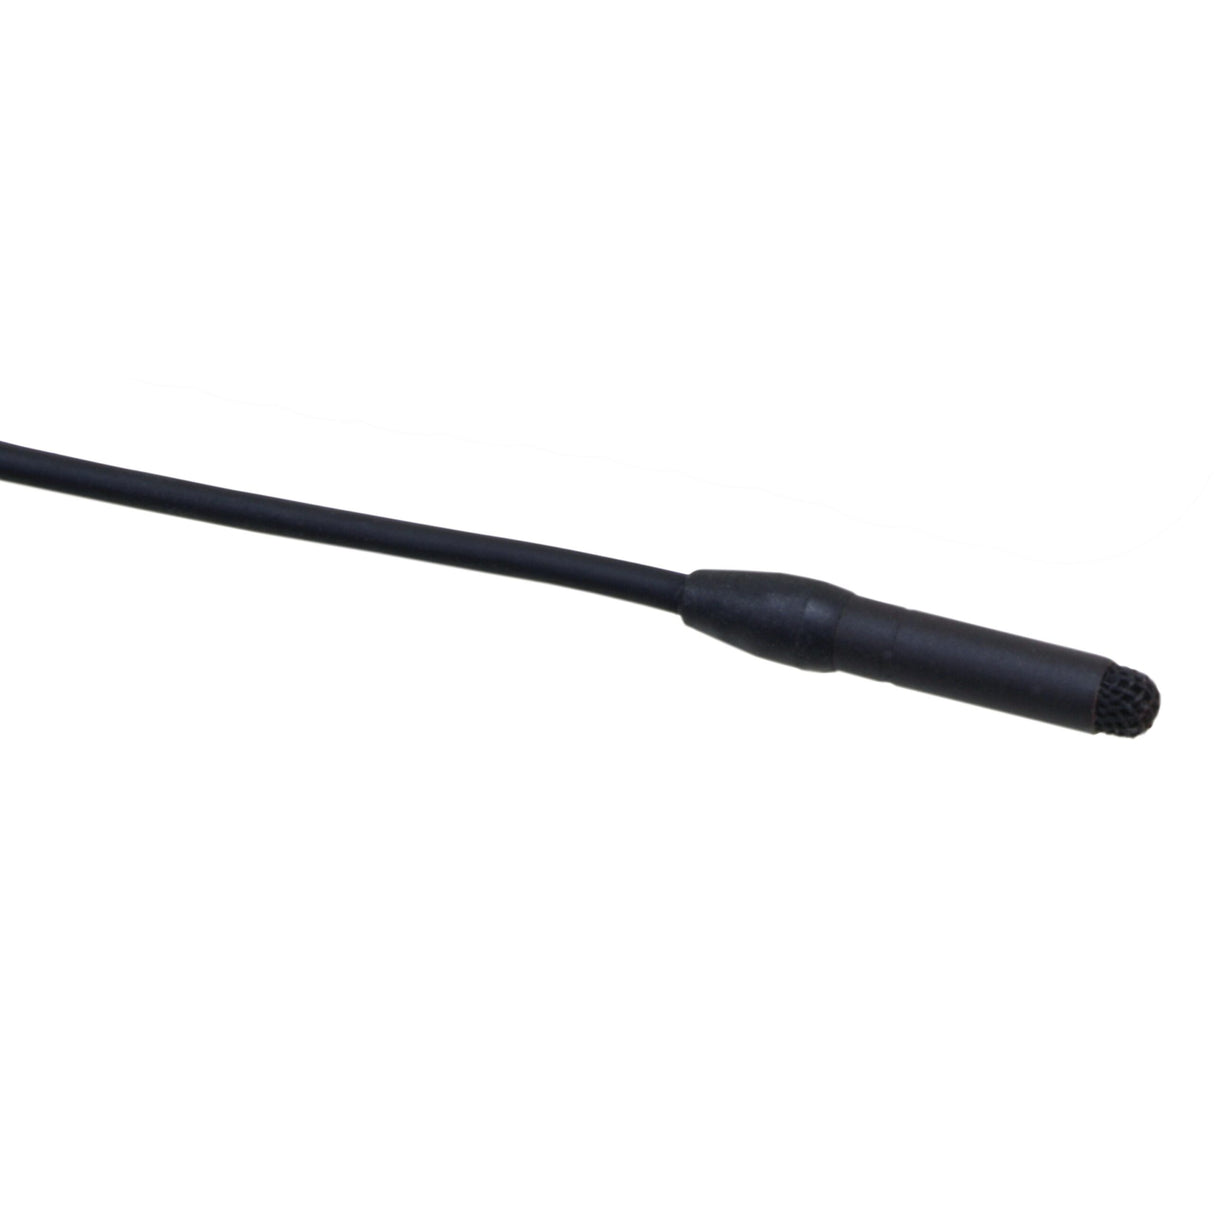 Sanken COS-11D-PT-1.8-BK Omnidirectional Lavalier Microphone, Black, Pigtail, Normal Sensitivity, 1.8m Stripped Cable